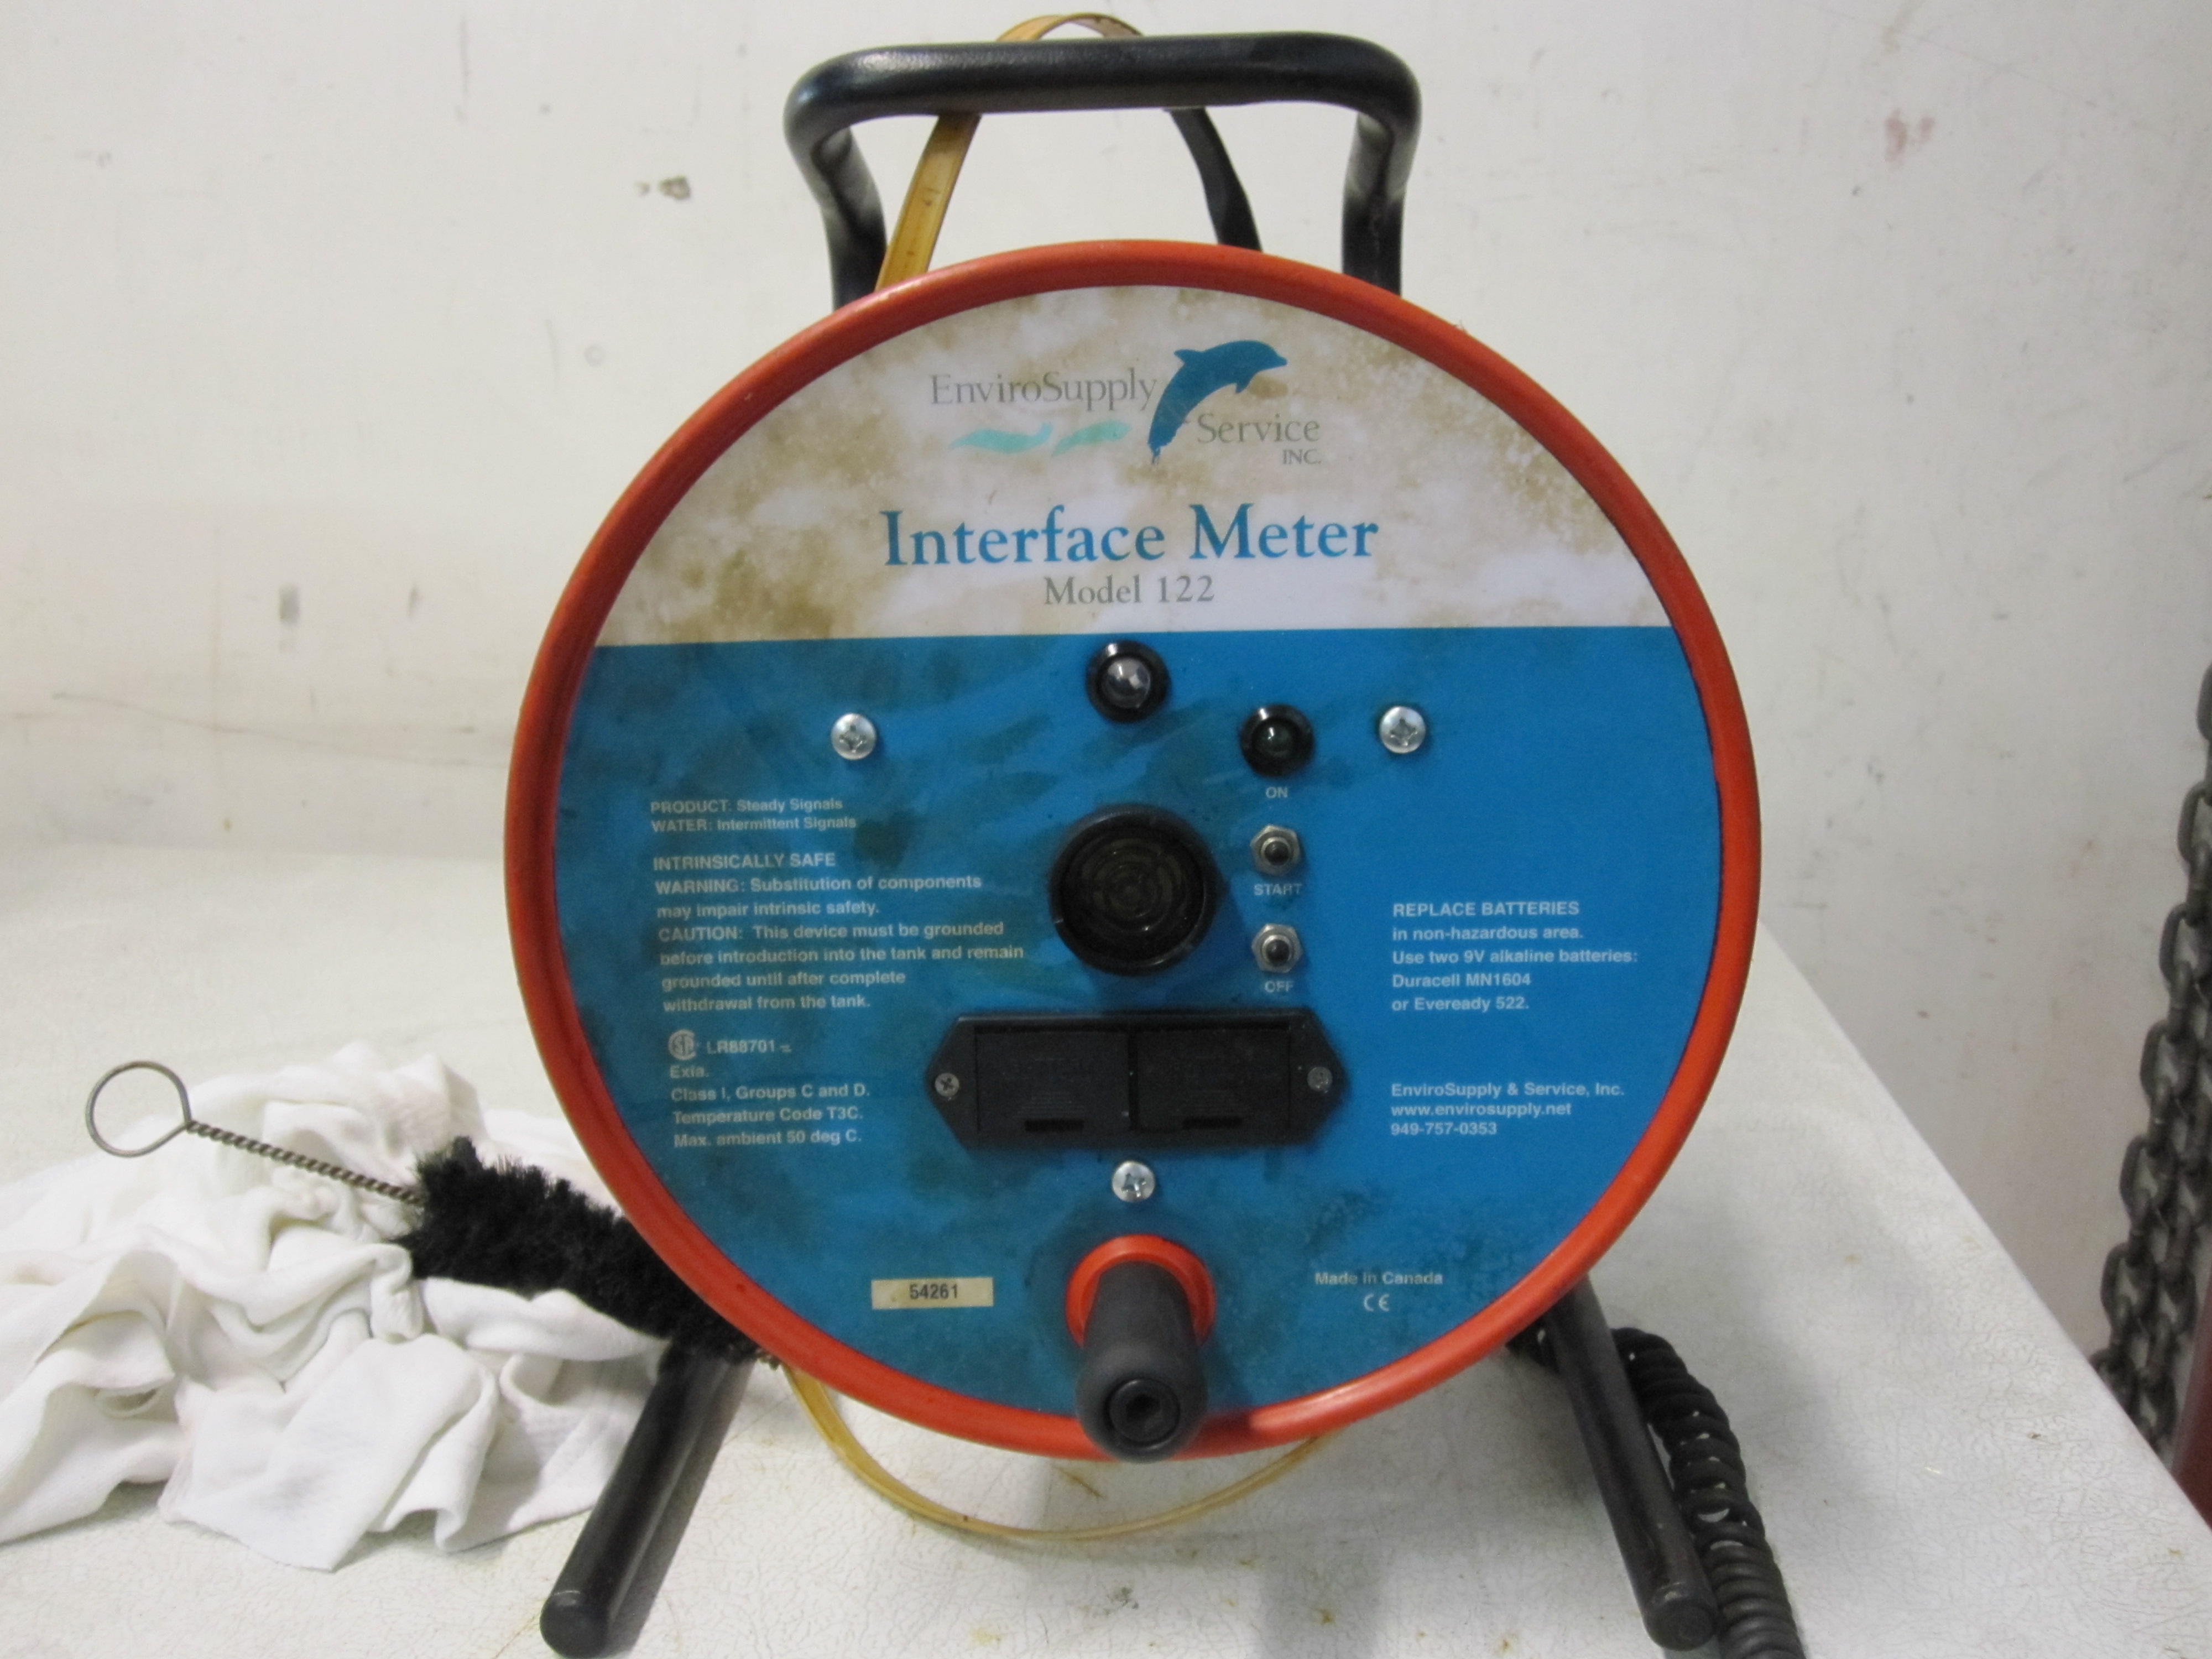 Pre-decontamination of Interface Meter